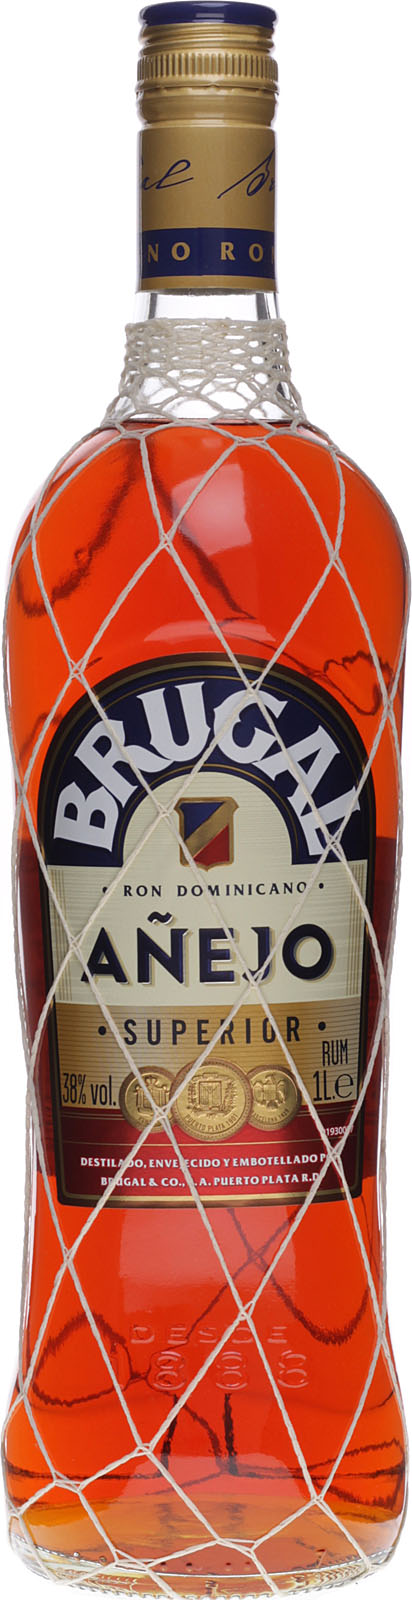 Brugal Ron Añejo Superior (5 Jahre) 1 Liter 38%